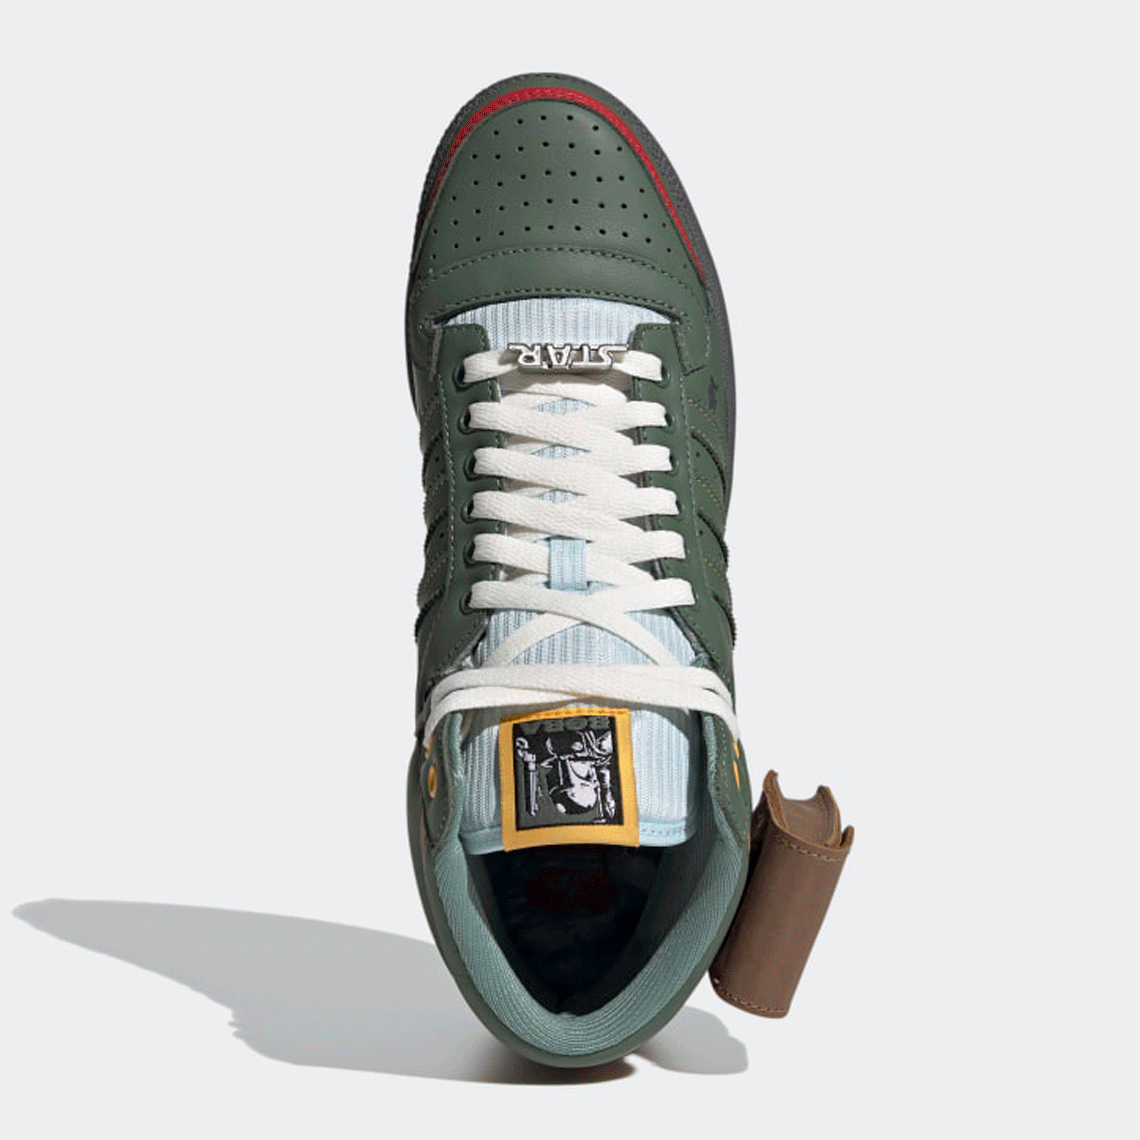 Inaccessible complement Sweep Star Wars adidas Top Ten Hi Boba Fett FZ3465 | SneakerNews.com